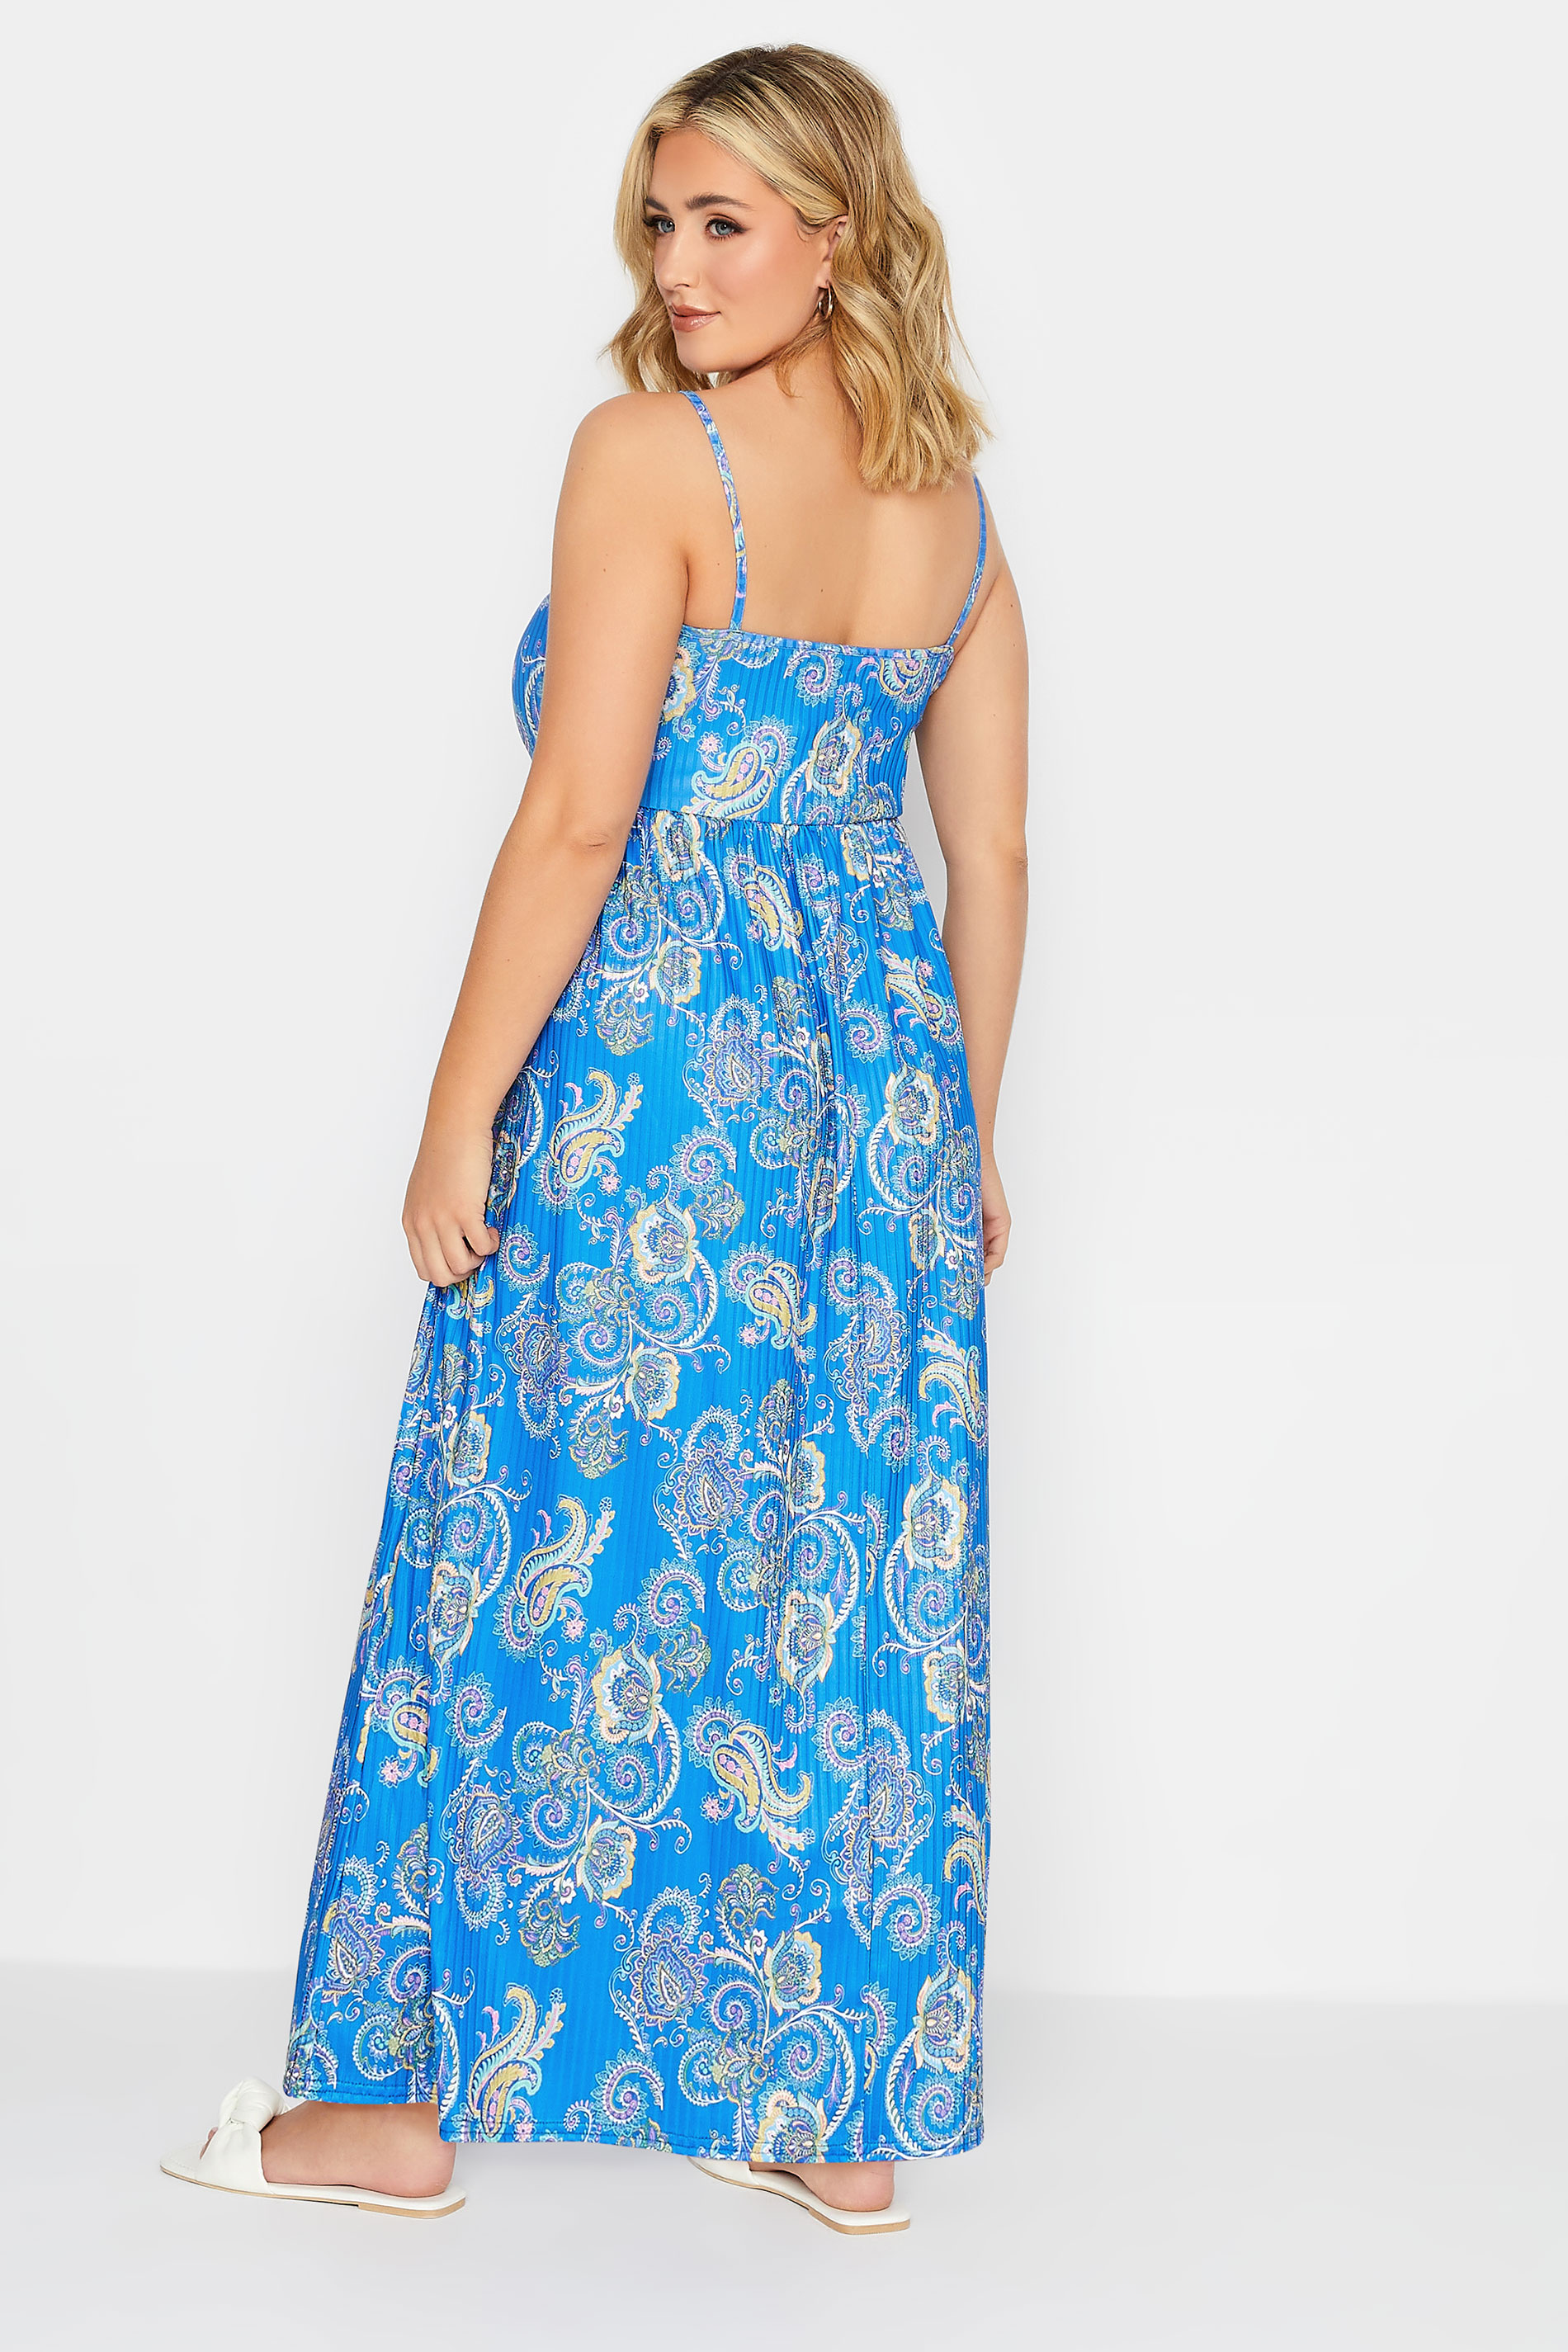 YOURS PETITE Plus Size Curve Blue Paisley Maxi Dress | Yours Clothing  3